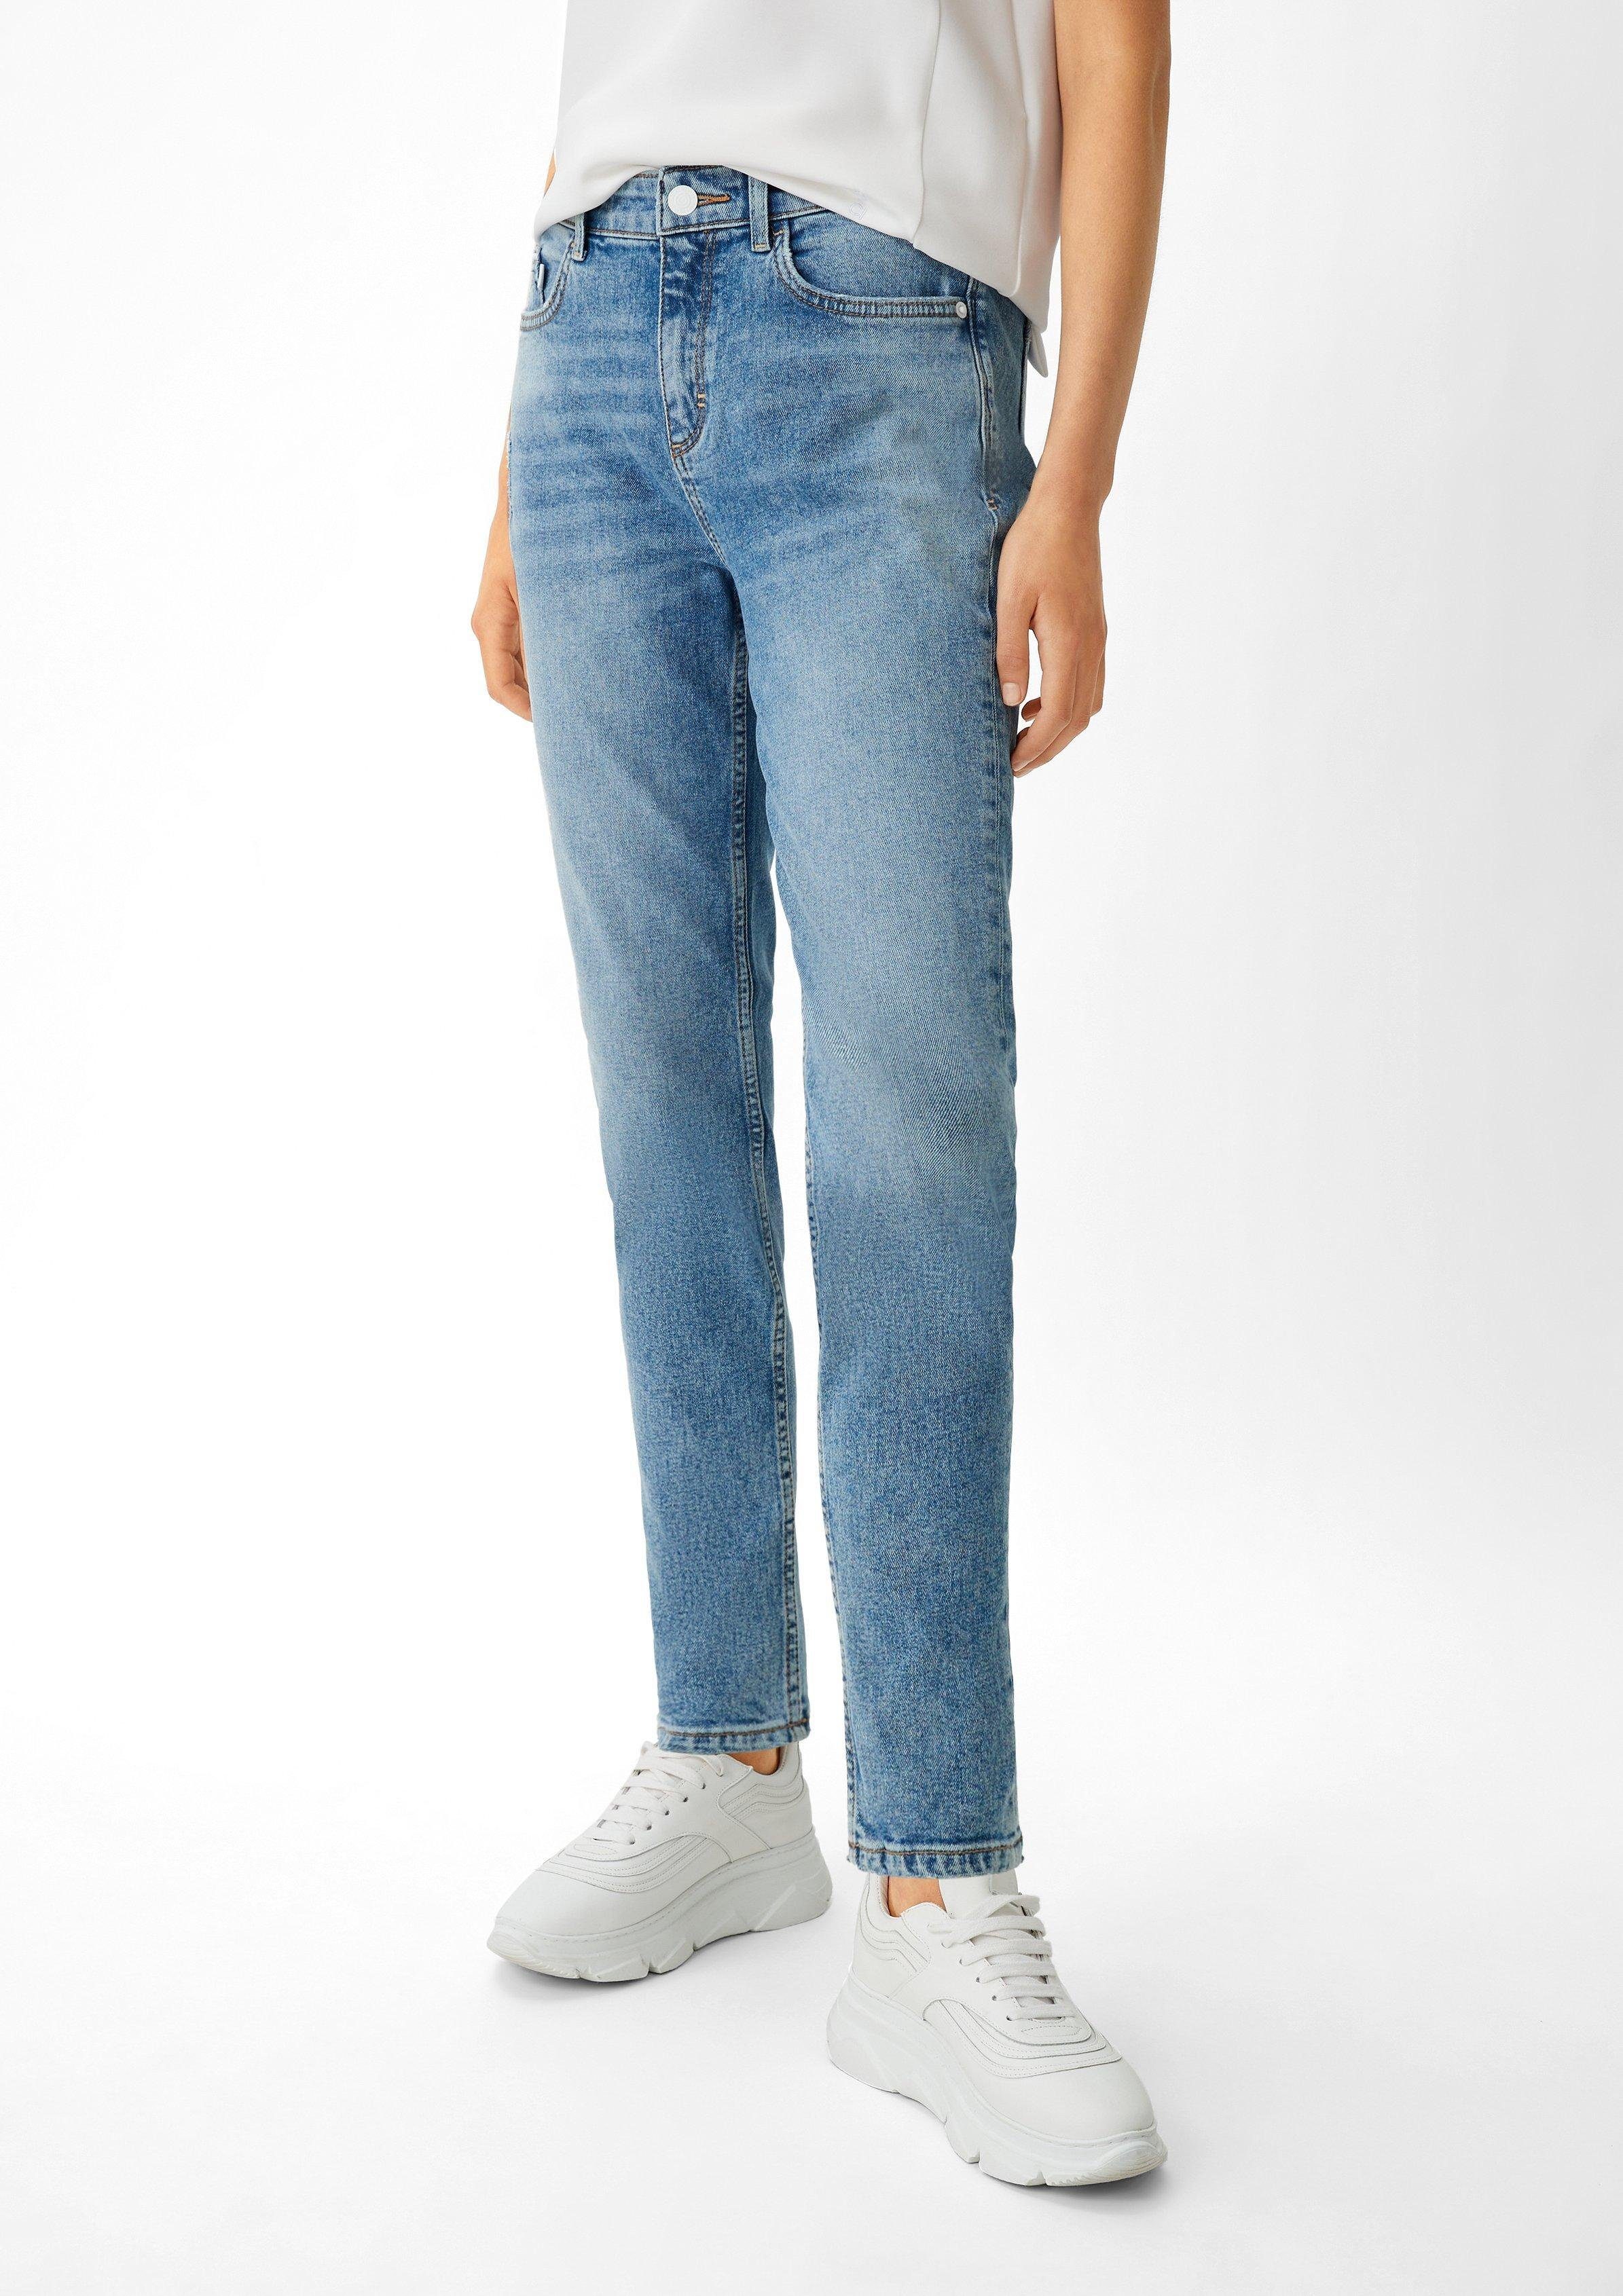 Waschung, Baumwollstretch casual Skinny: comma Jeans aus Leder-Patch 5-Pocket-Jeans identity Kontrast-Details,